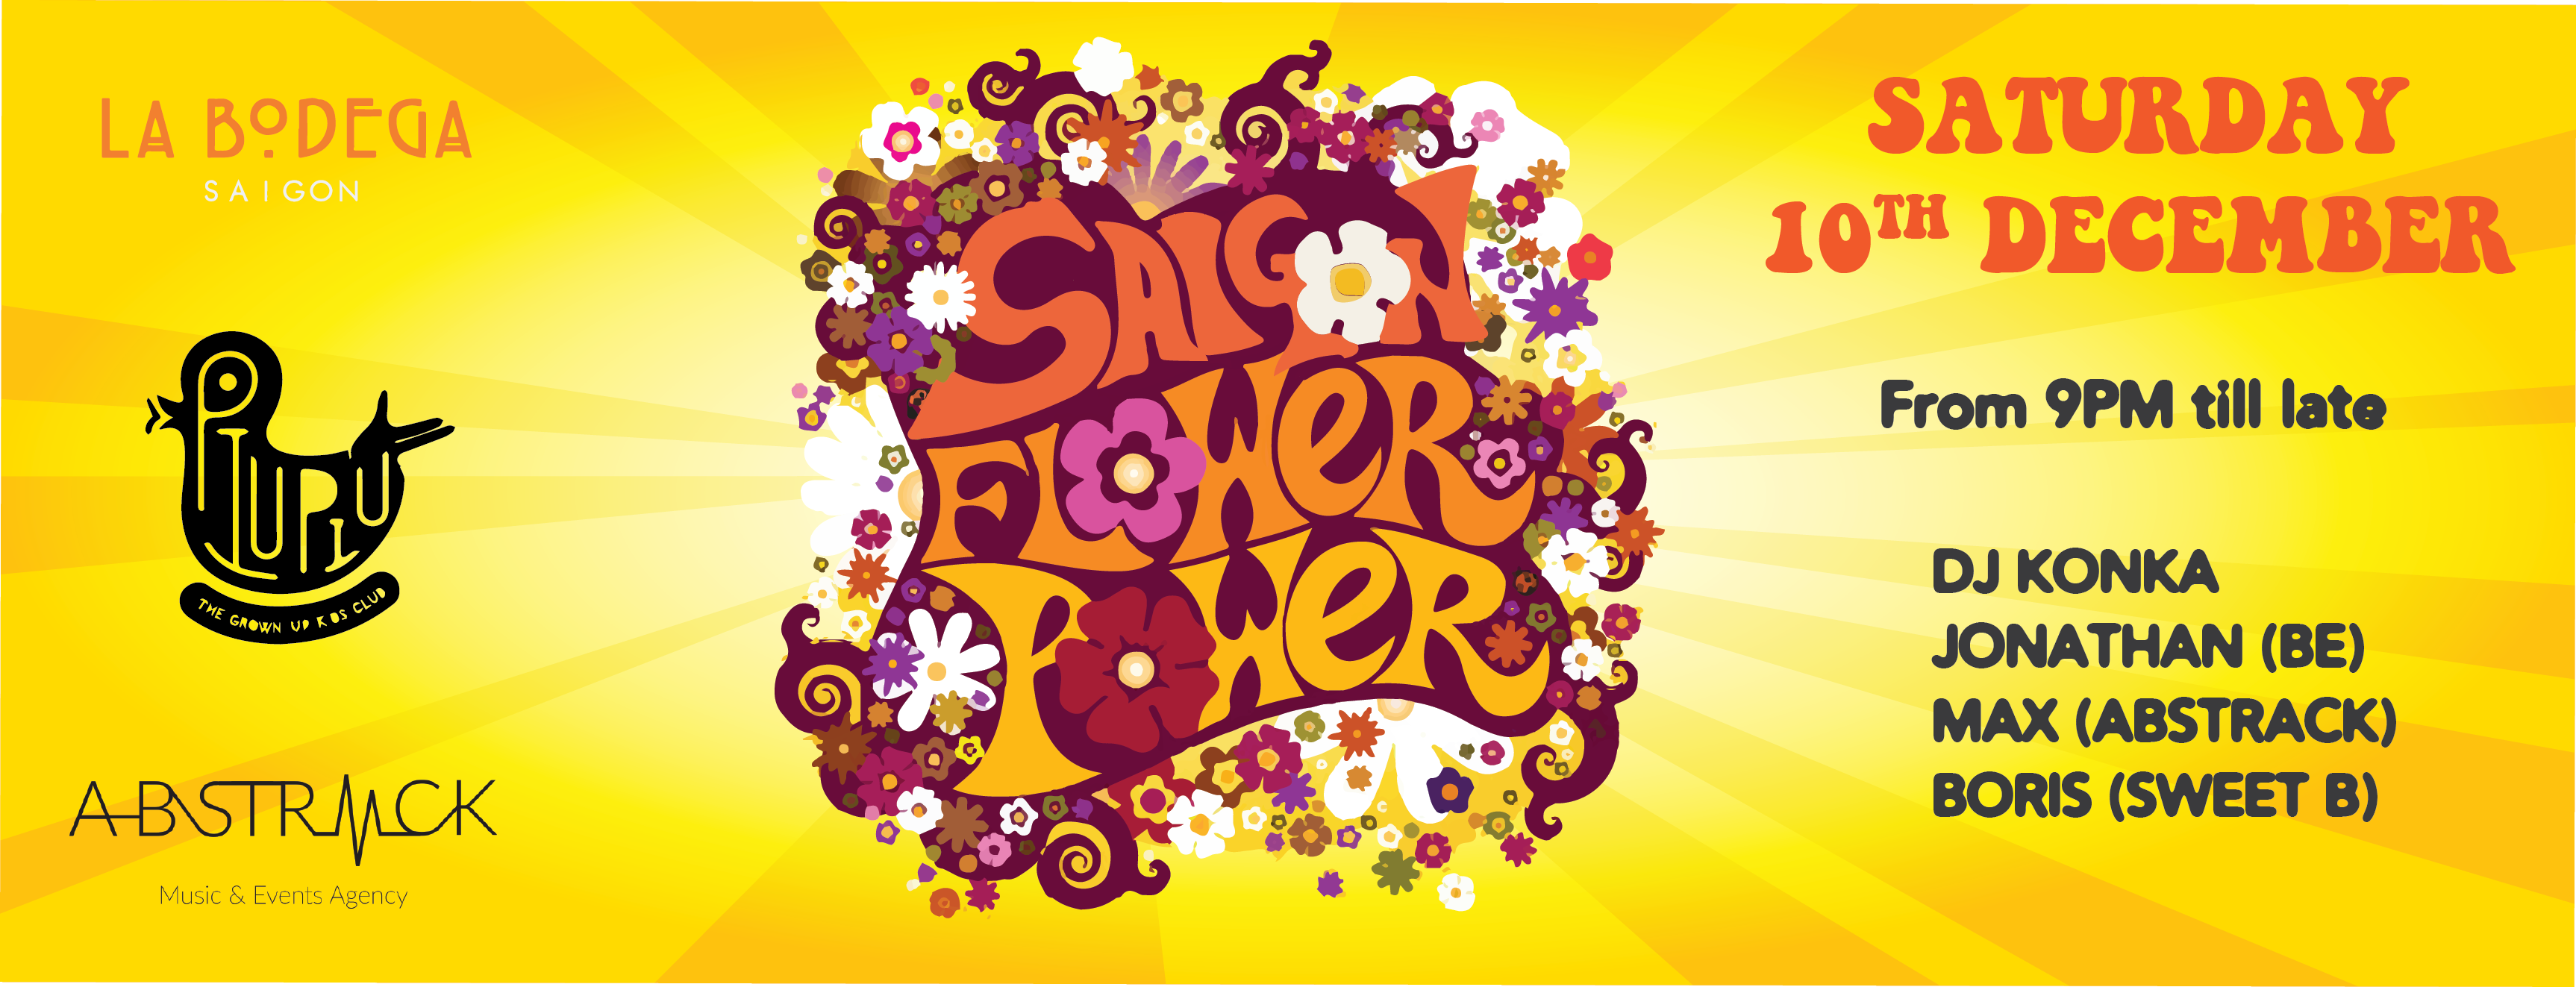 Flyers Saigon Flower Power